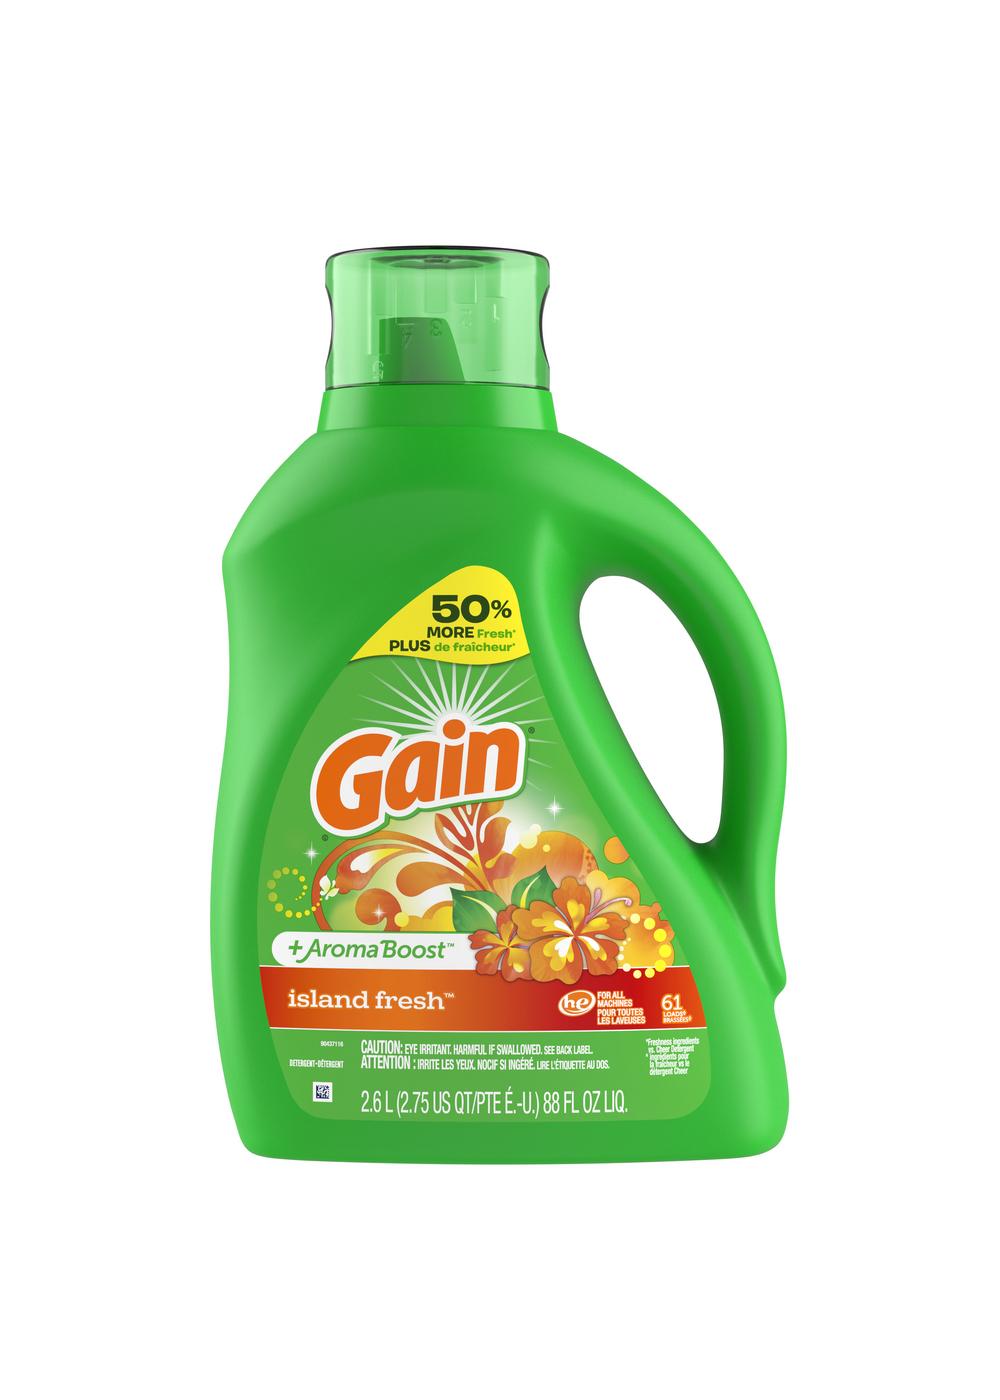 Gain + Aroma Boost HE Liquid Laundry Detergent, 61 Loads - Island Fresh; image 6 of 8